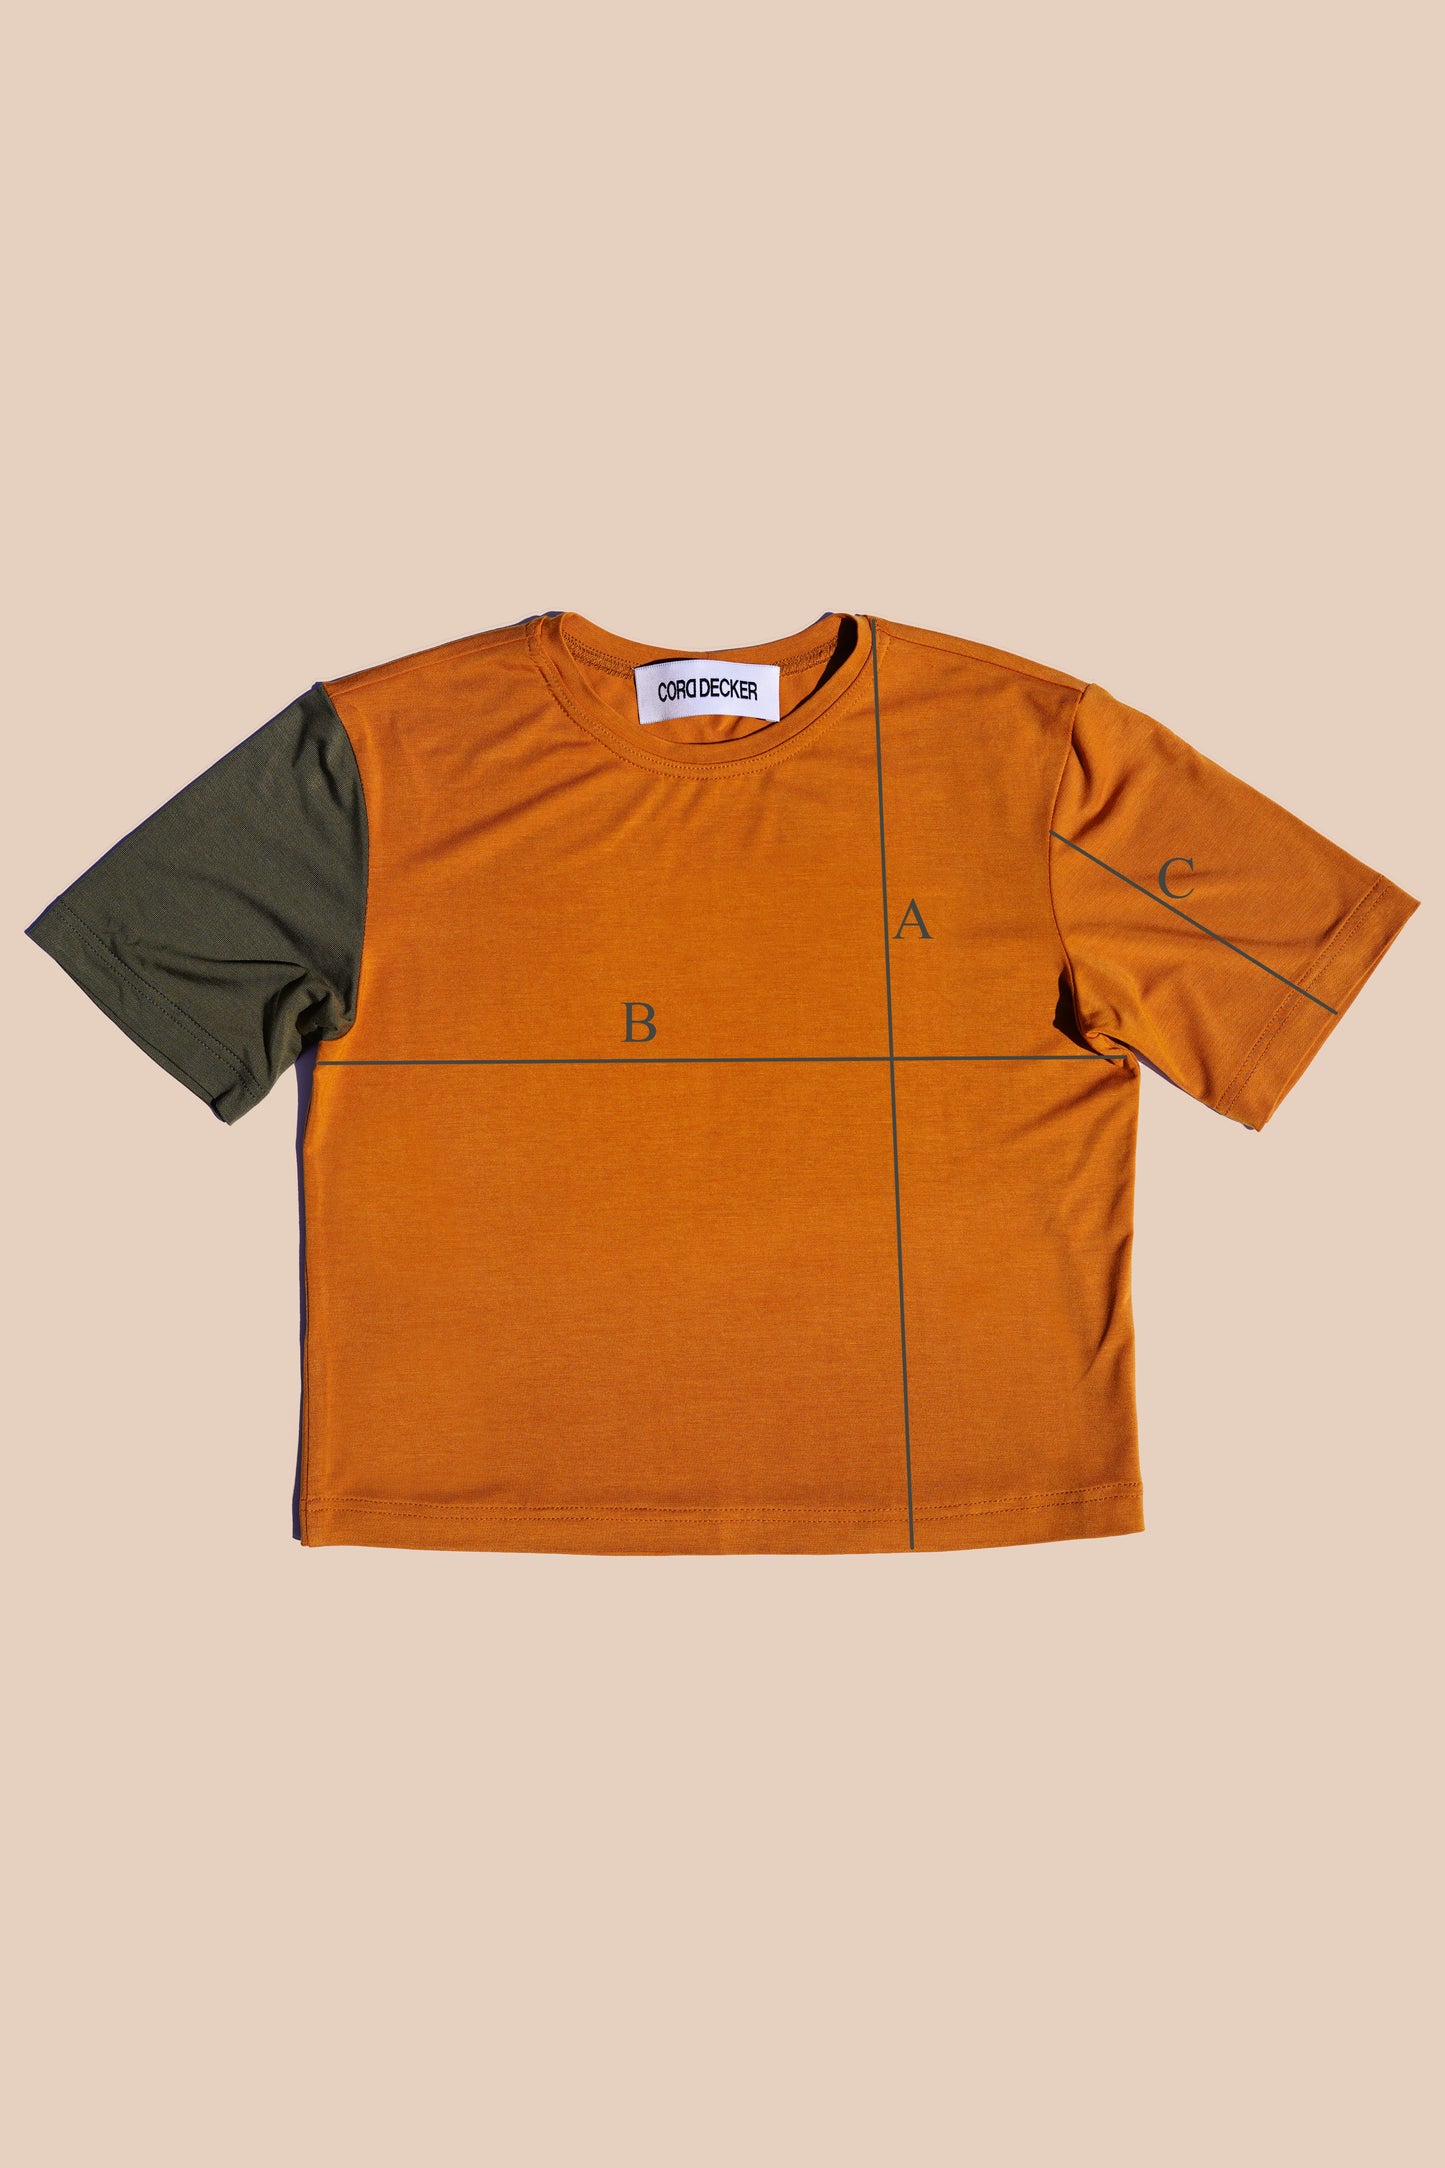 T-shirt with short sleeves, orange